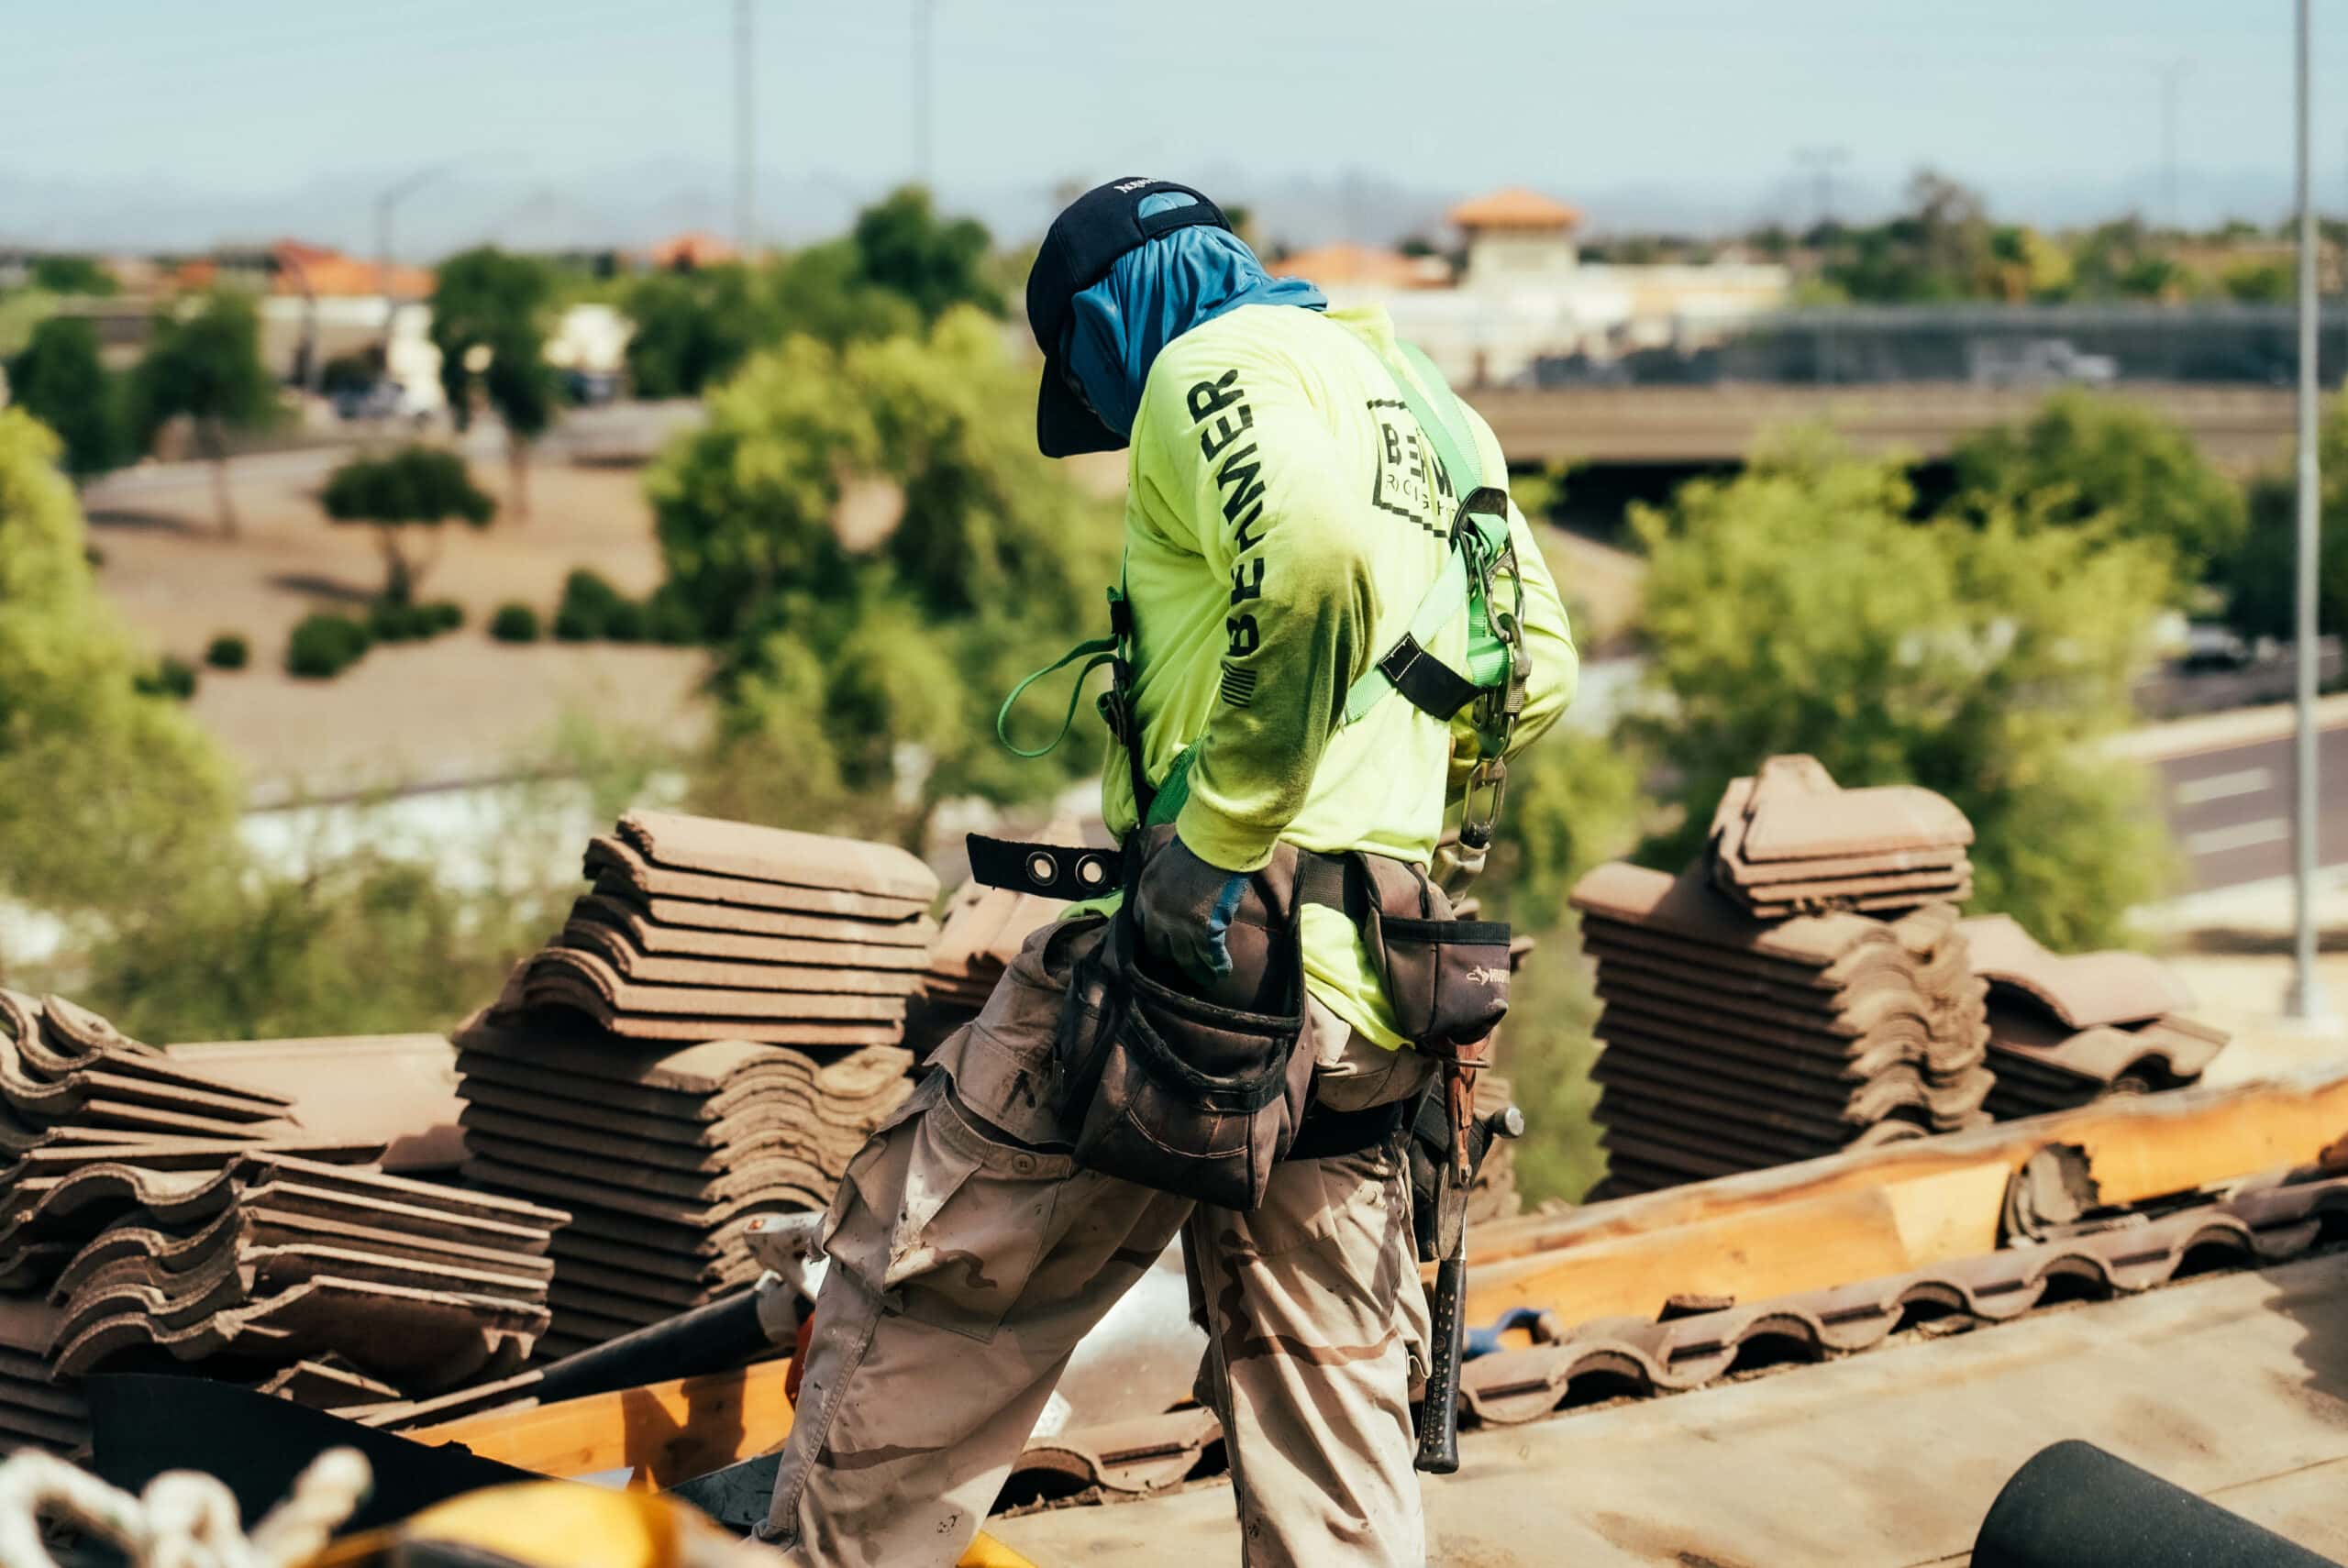 Behmer roofing specialist engaged in tile re-felt preparation in Desert Ridge, Phoenix.